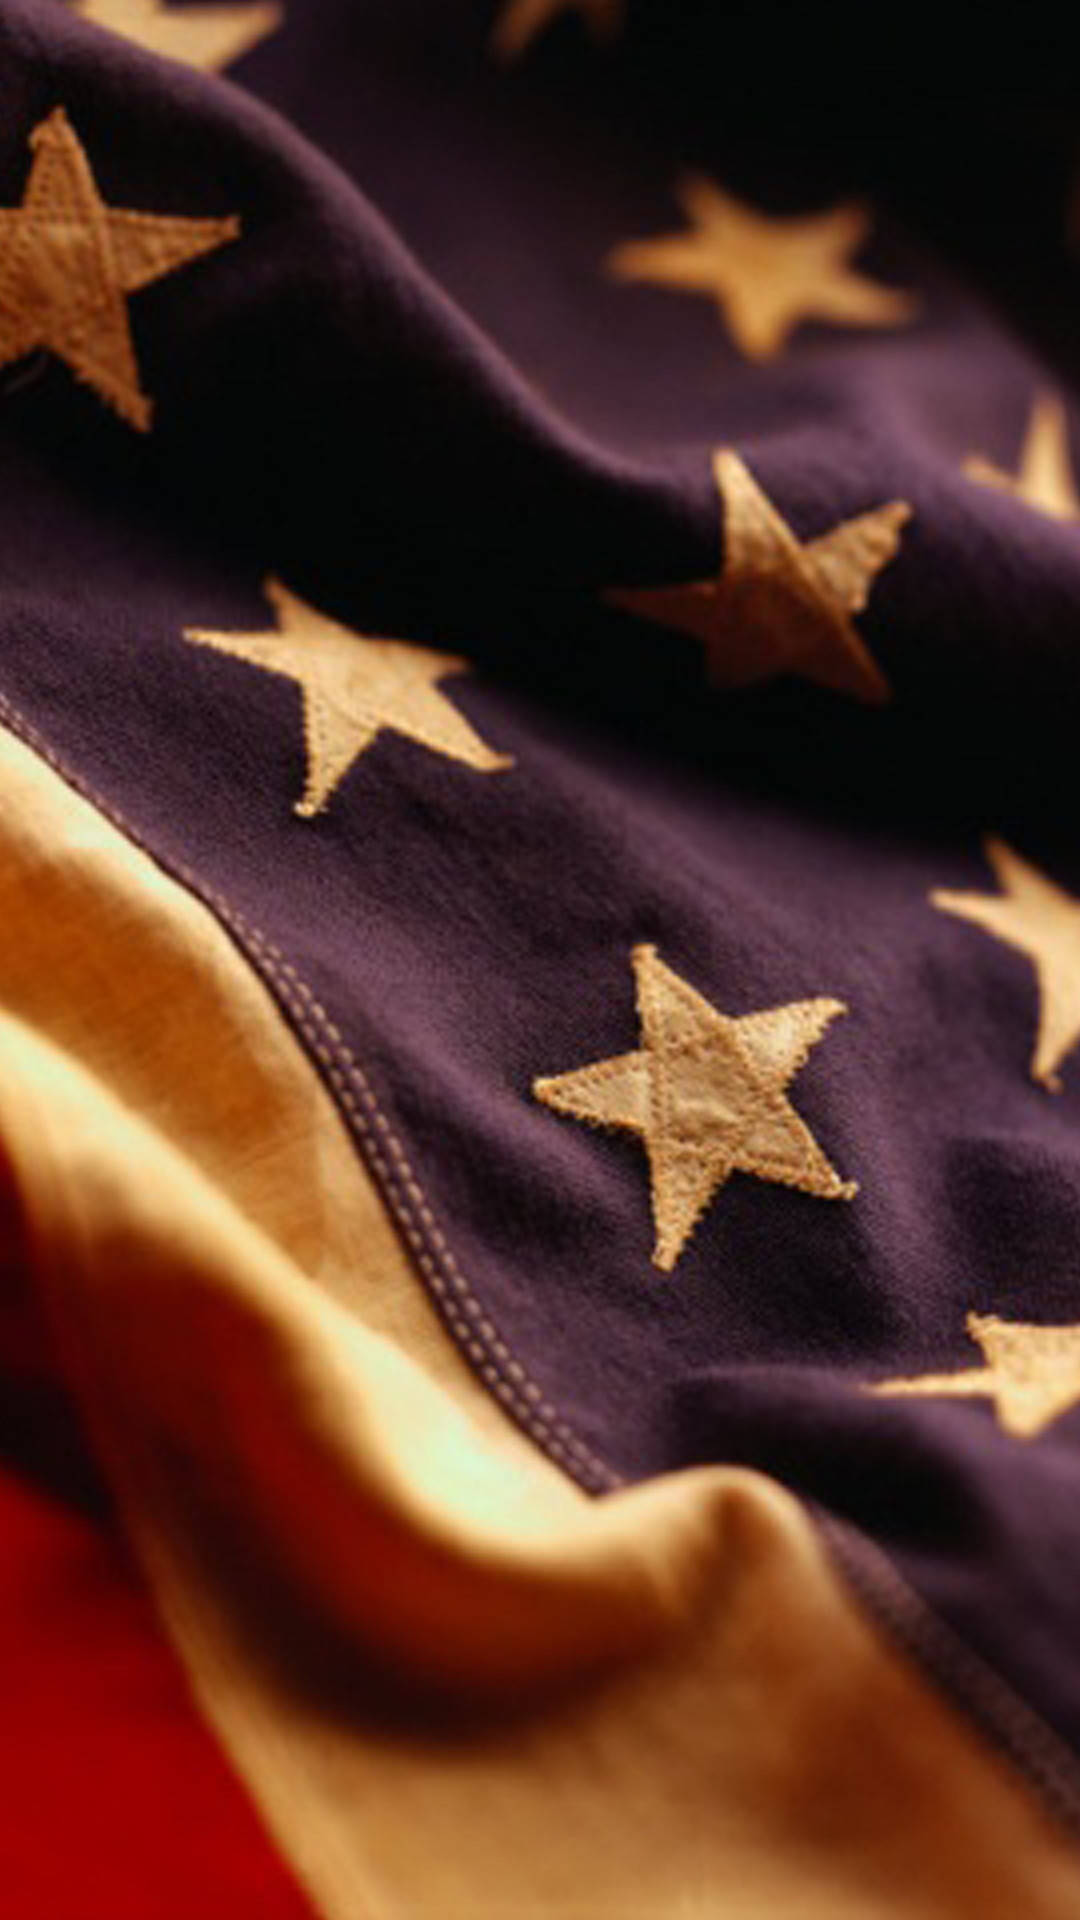 Inspiring American Flag Cool iPhone Wallpaper